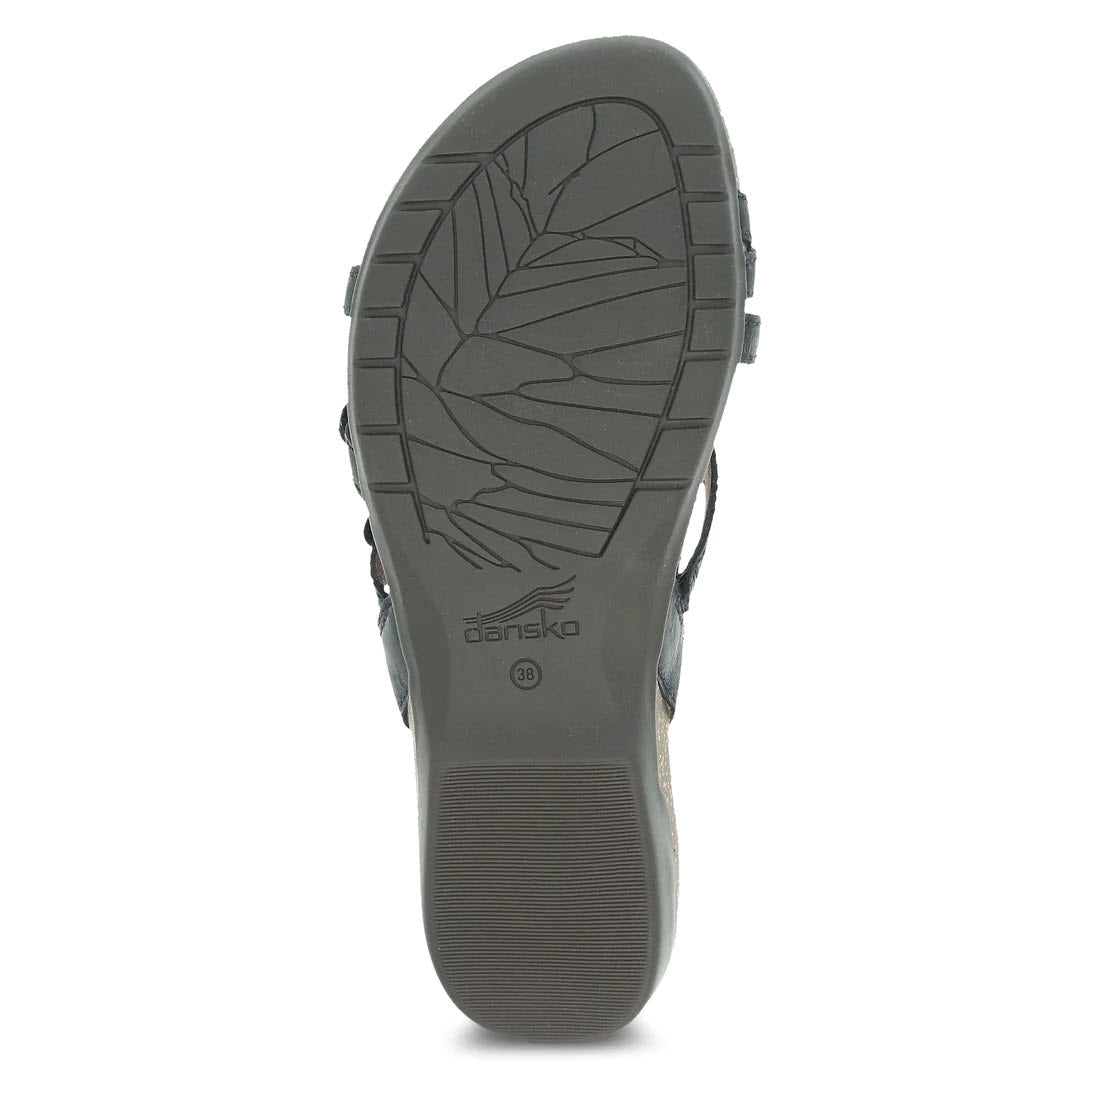 Sole of a Dansko Roslyn Black - Womens sandal displaying the tread pattern and brand logo.